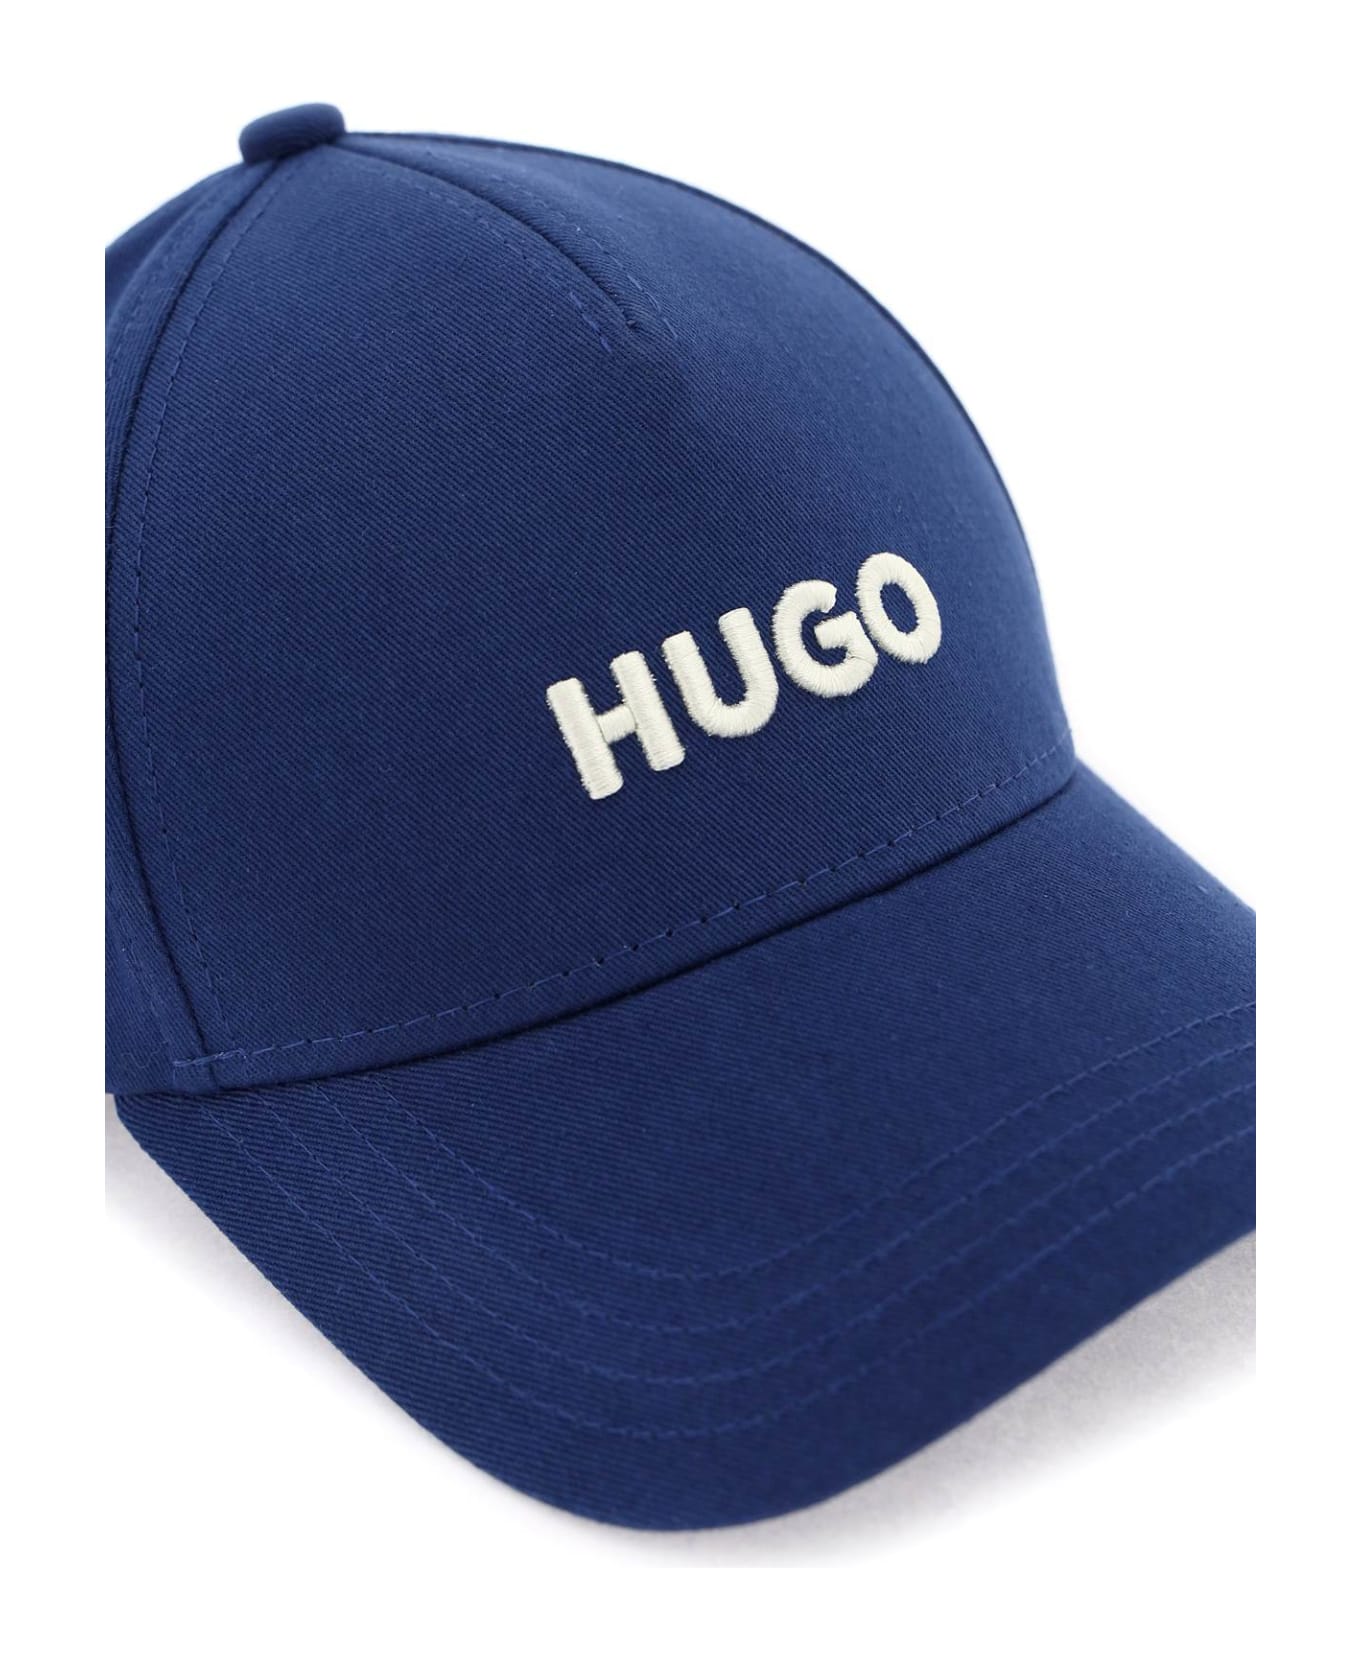 Hugo Boss Baseball Cap With Embroidered Logo - NAVY (Blue)